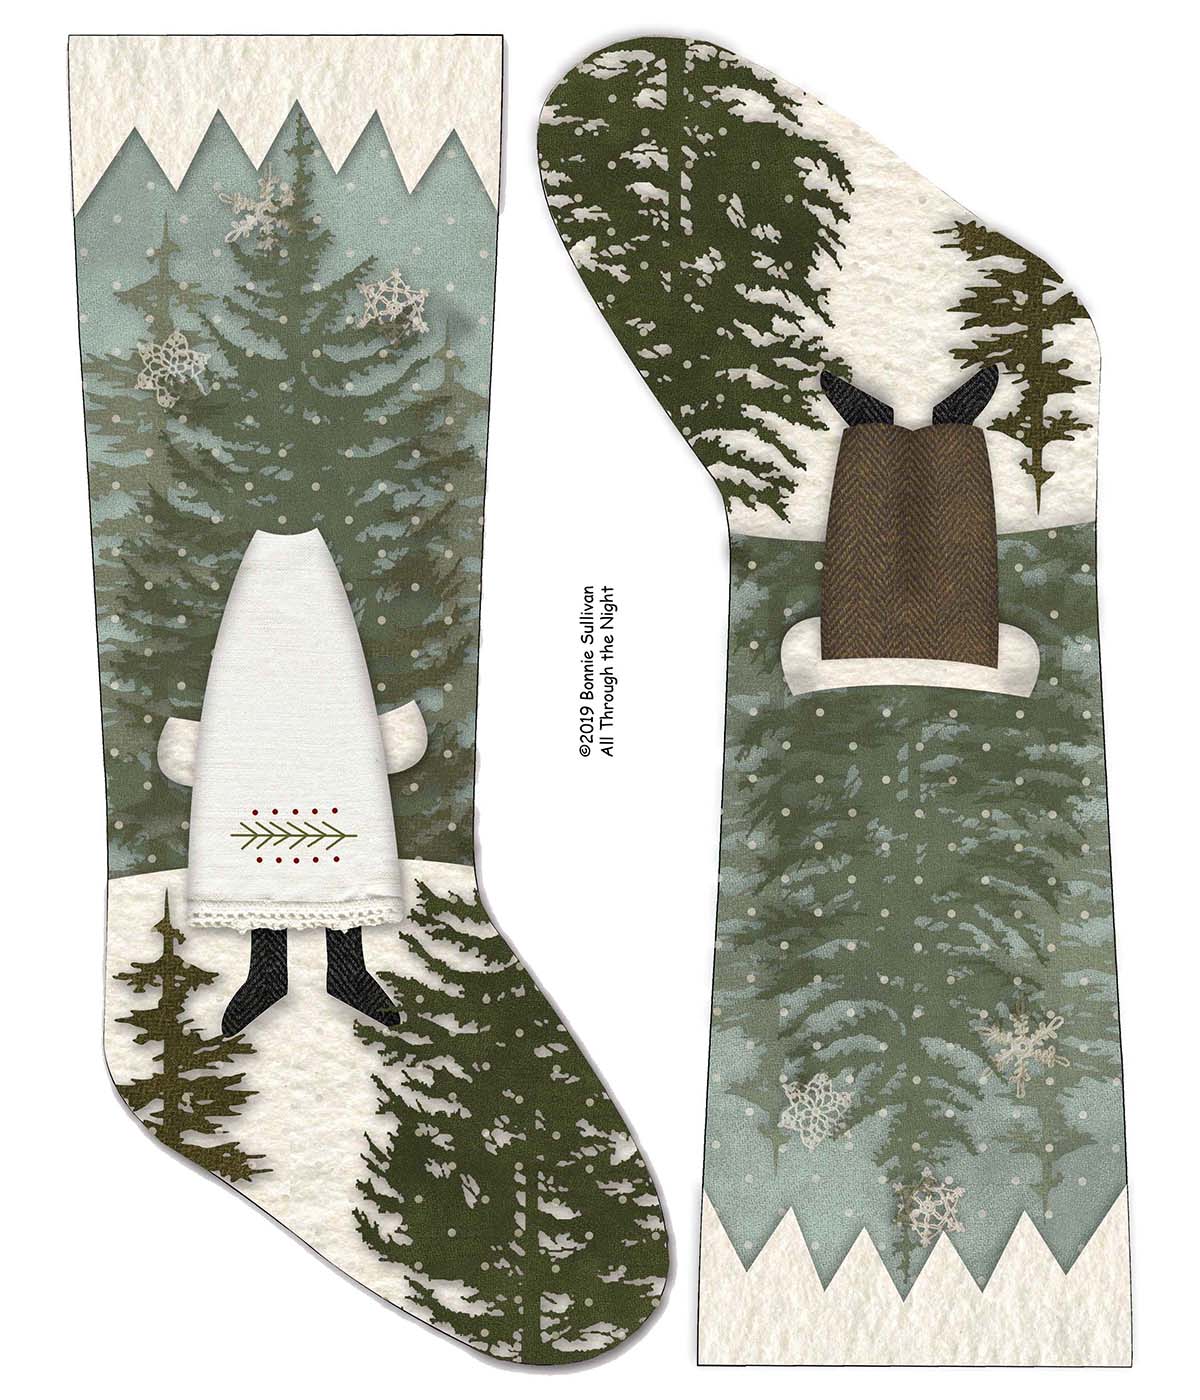 F1910 - Winter Wonderland Stockings Preprinted Fabric